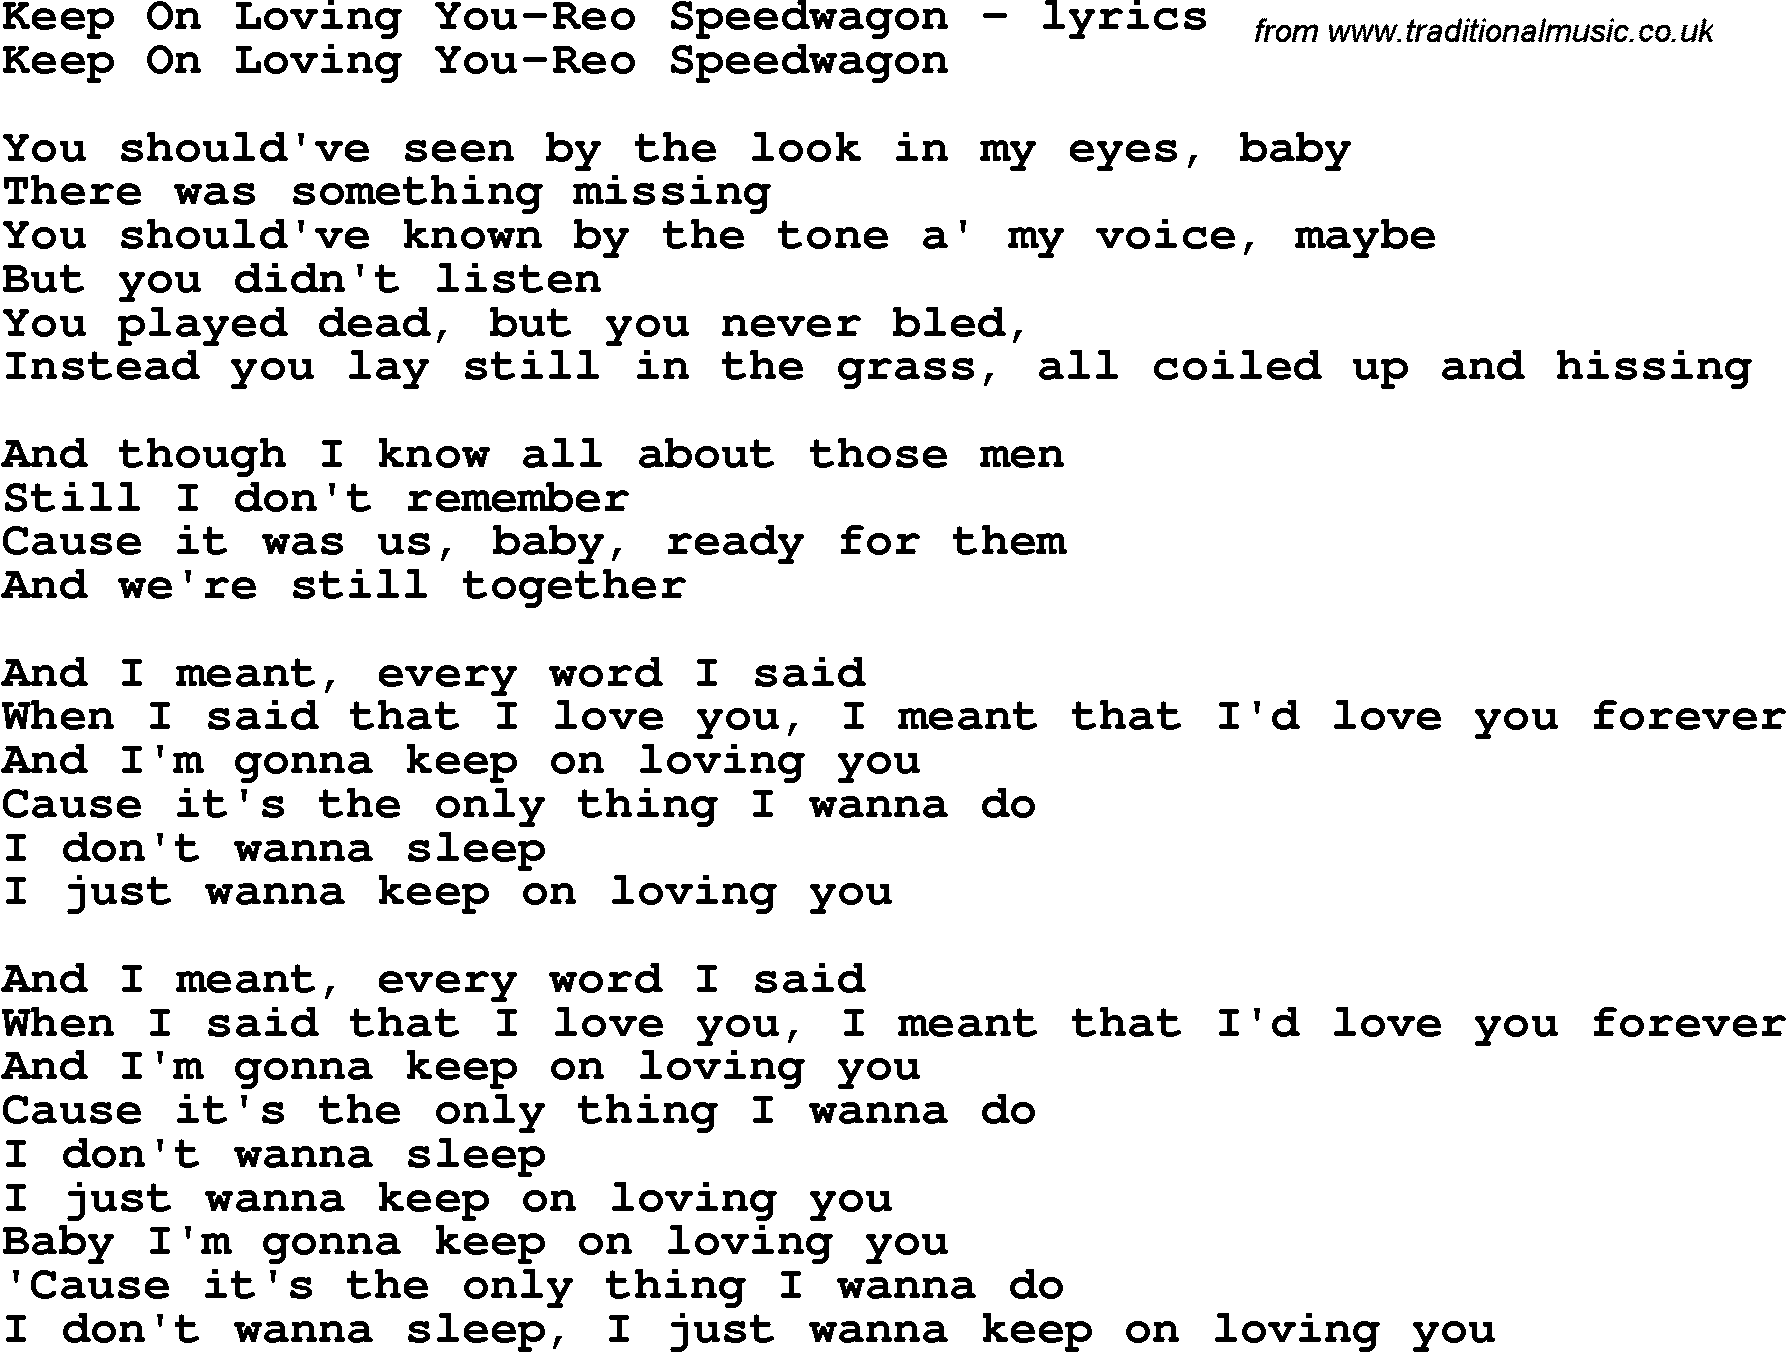 Love Song Lyrics for: Keep On Loving You-Reo Speedwagon